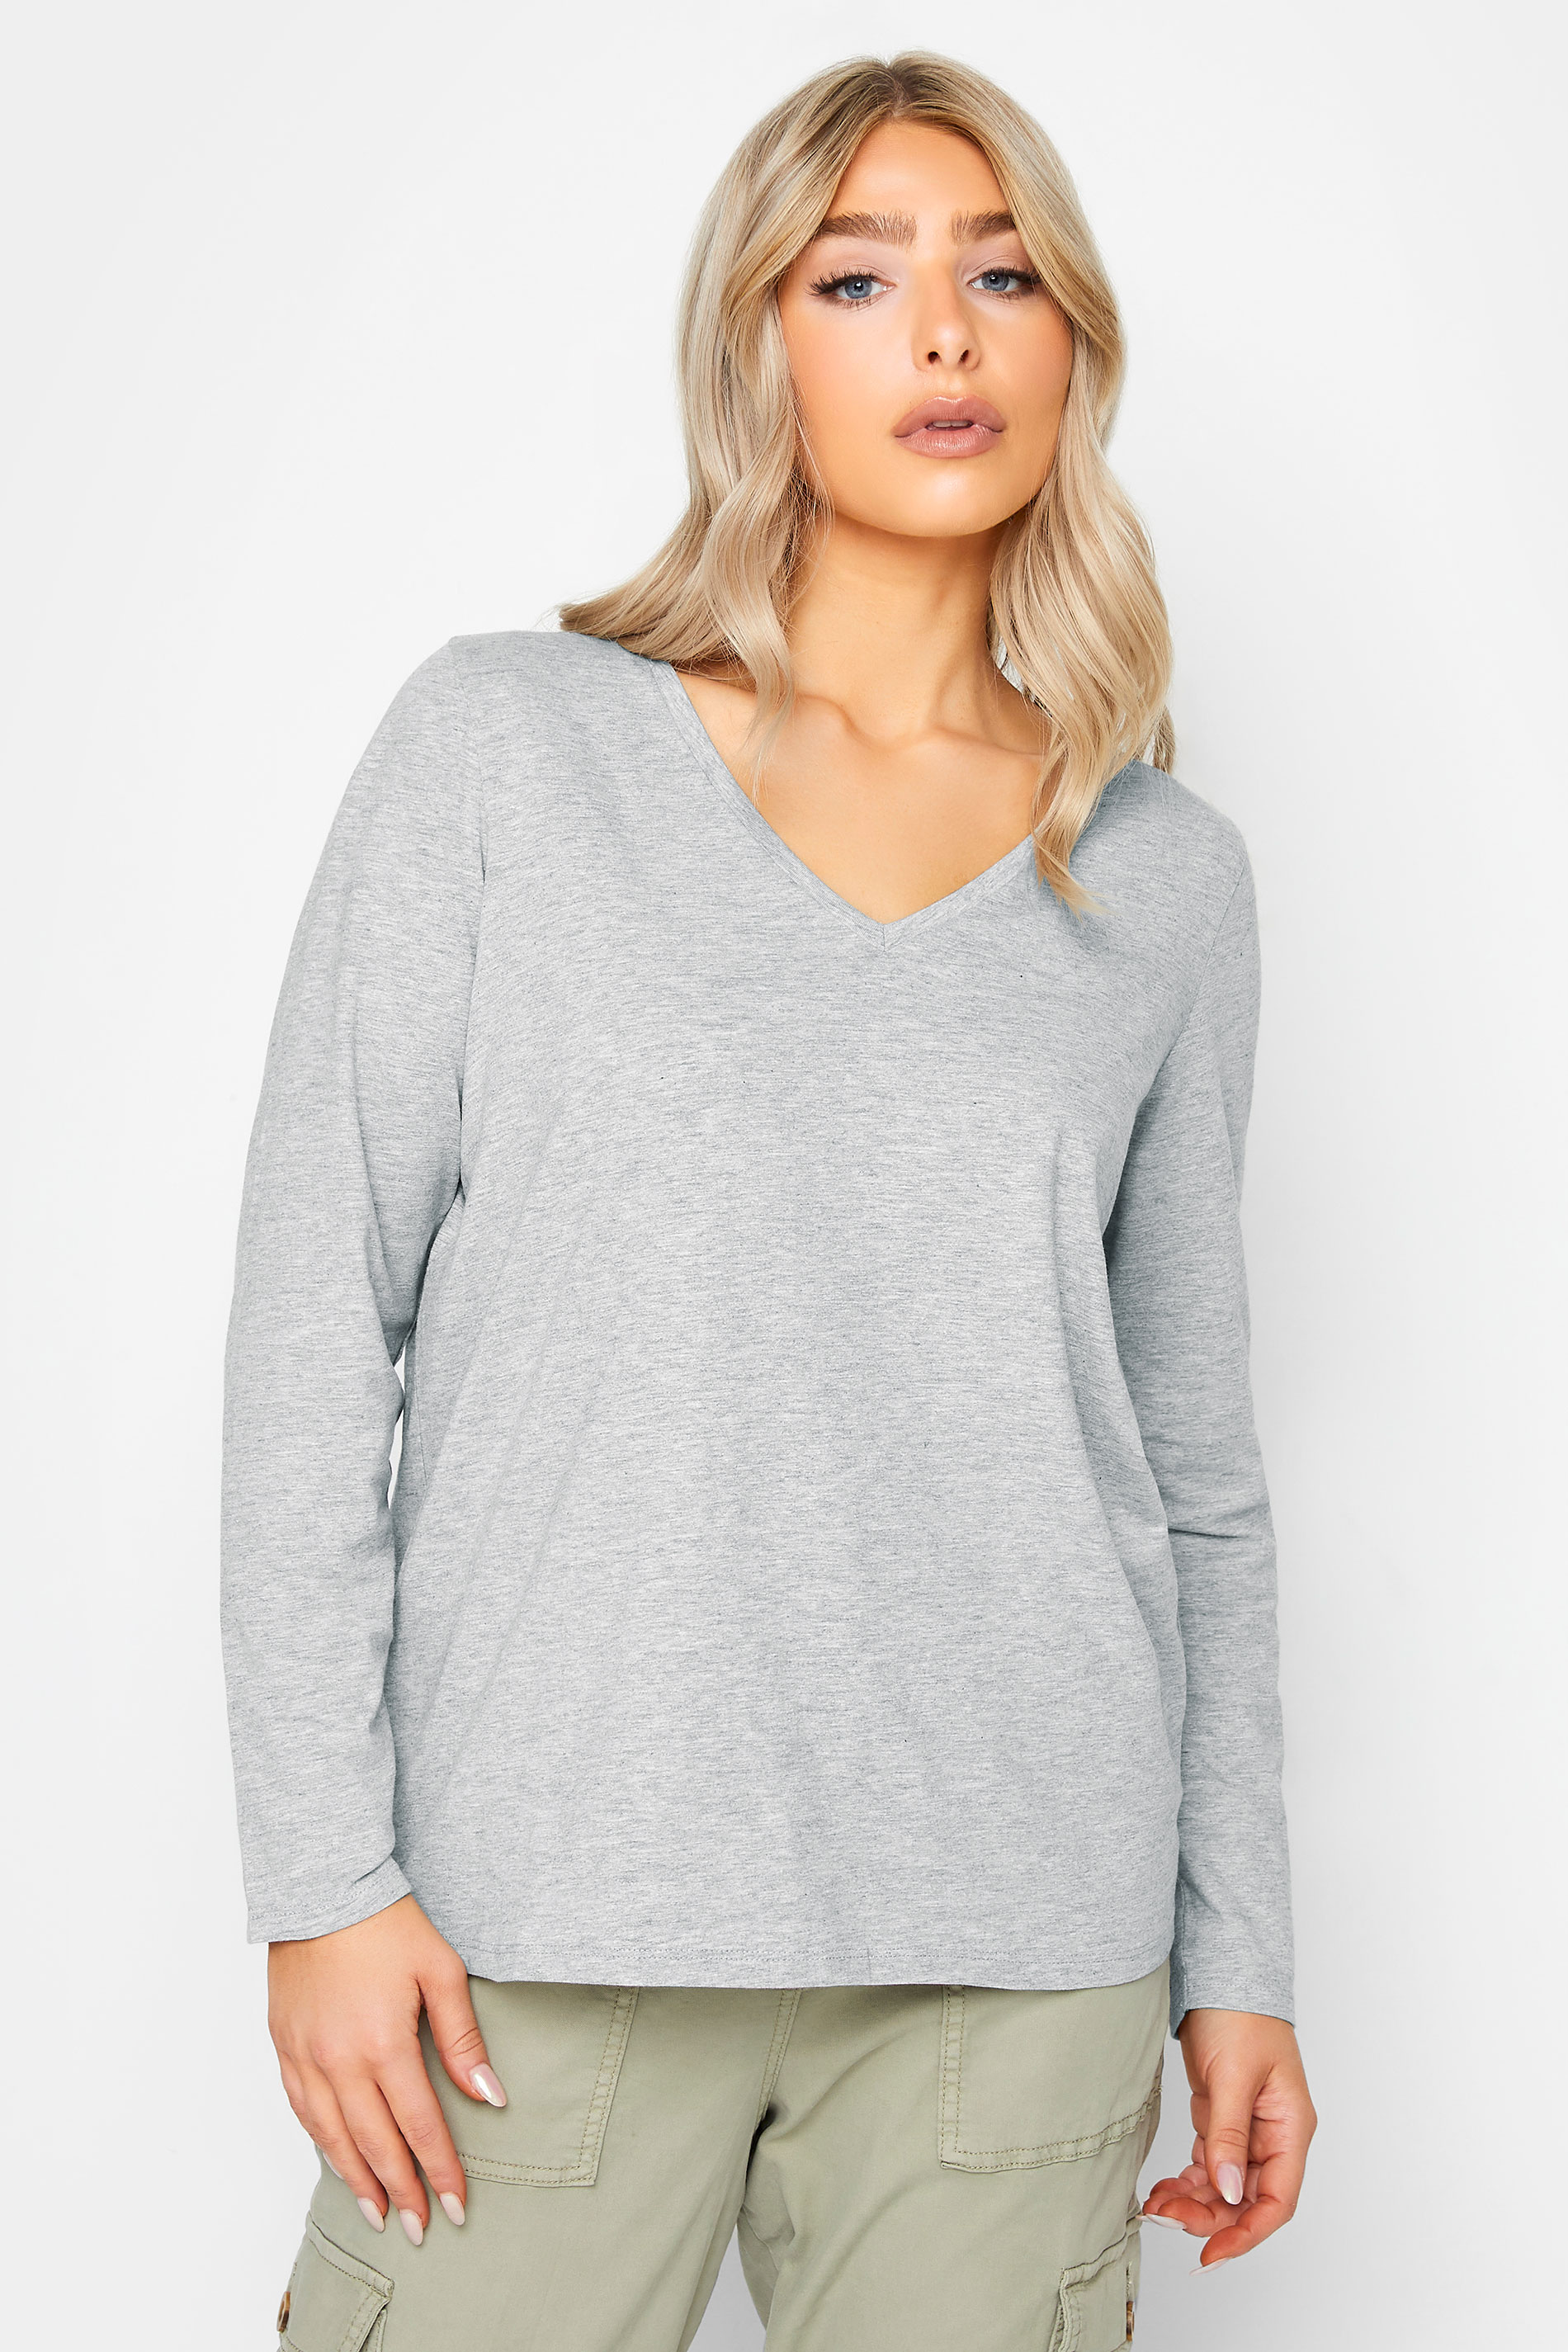 M&Co Grey V-Neck Long Sleeve T-Shirt | M&Co 2